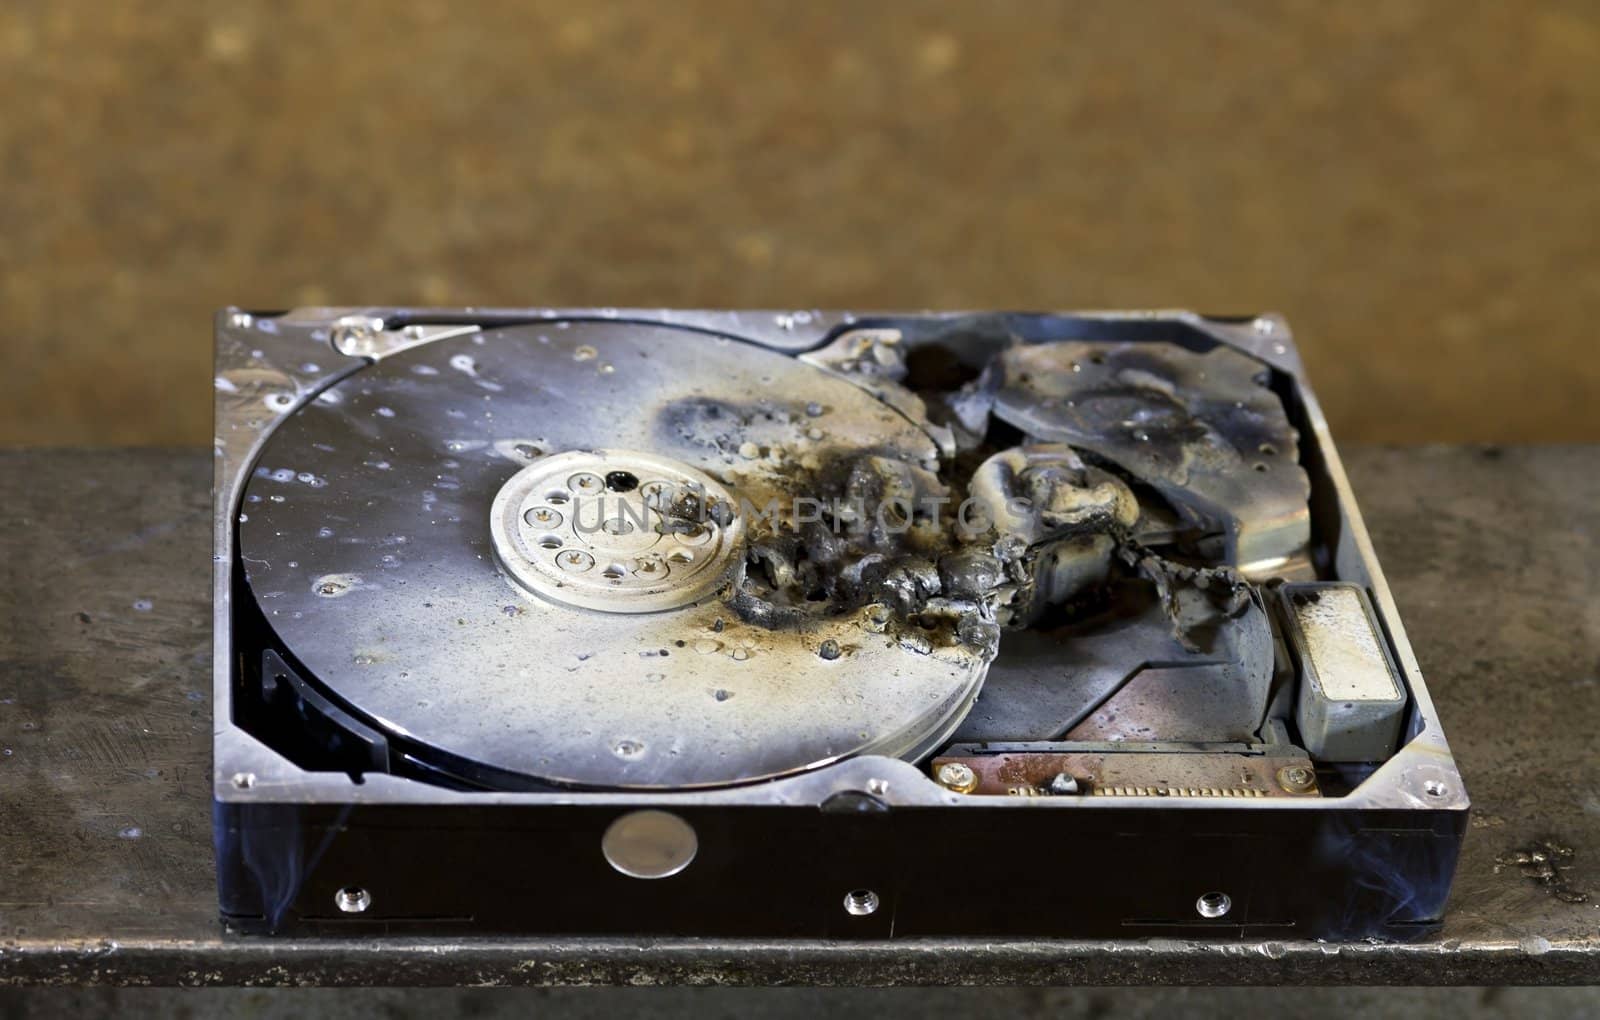 dead hard drive in close up by gewoldi